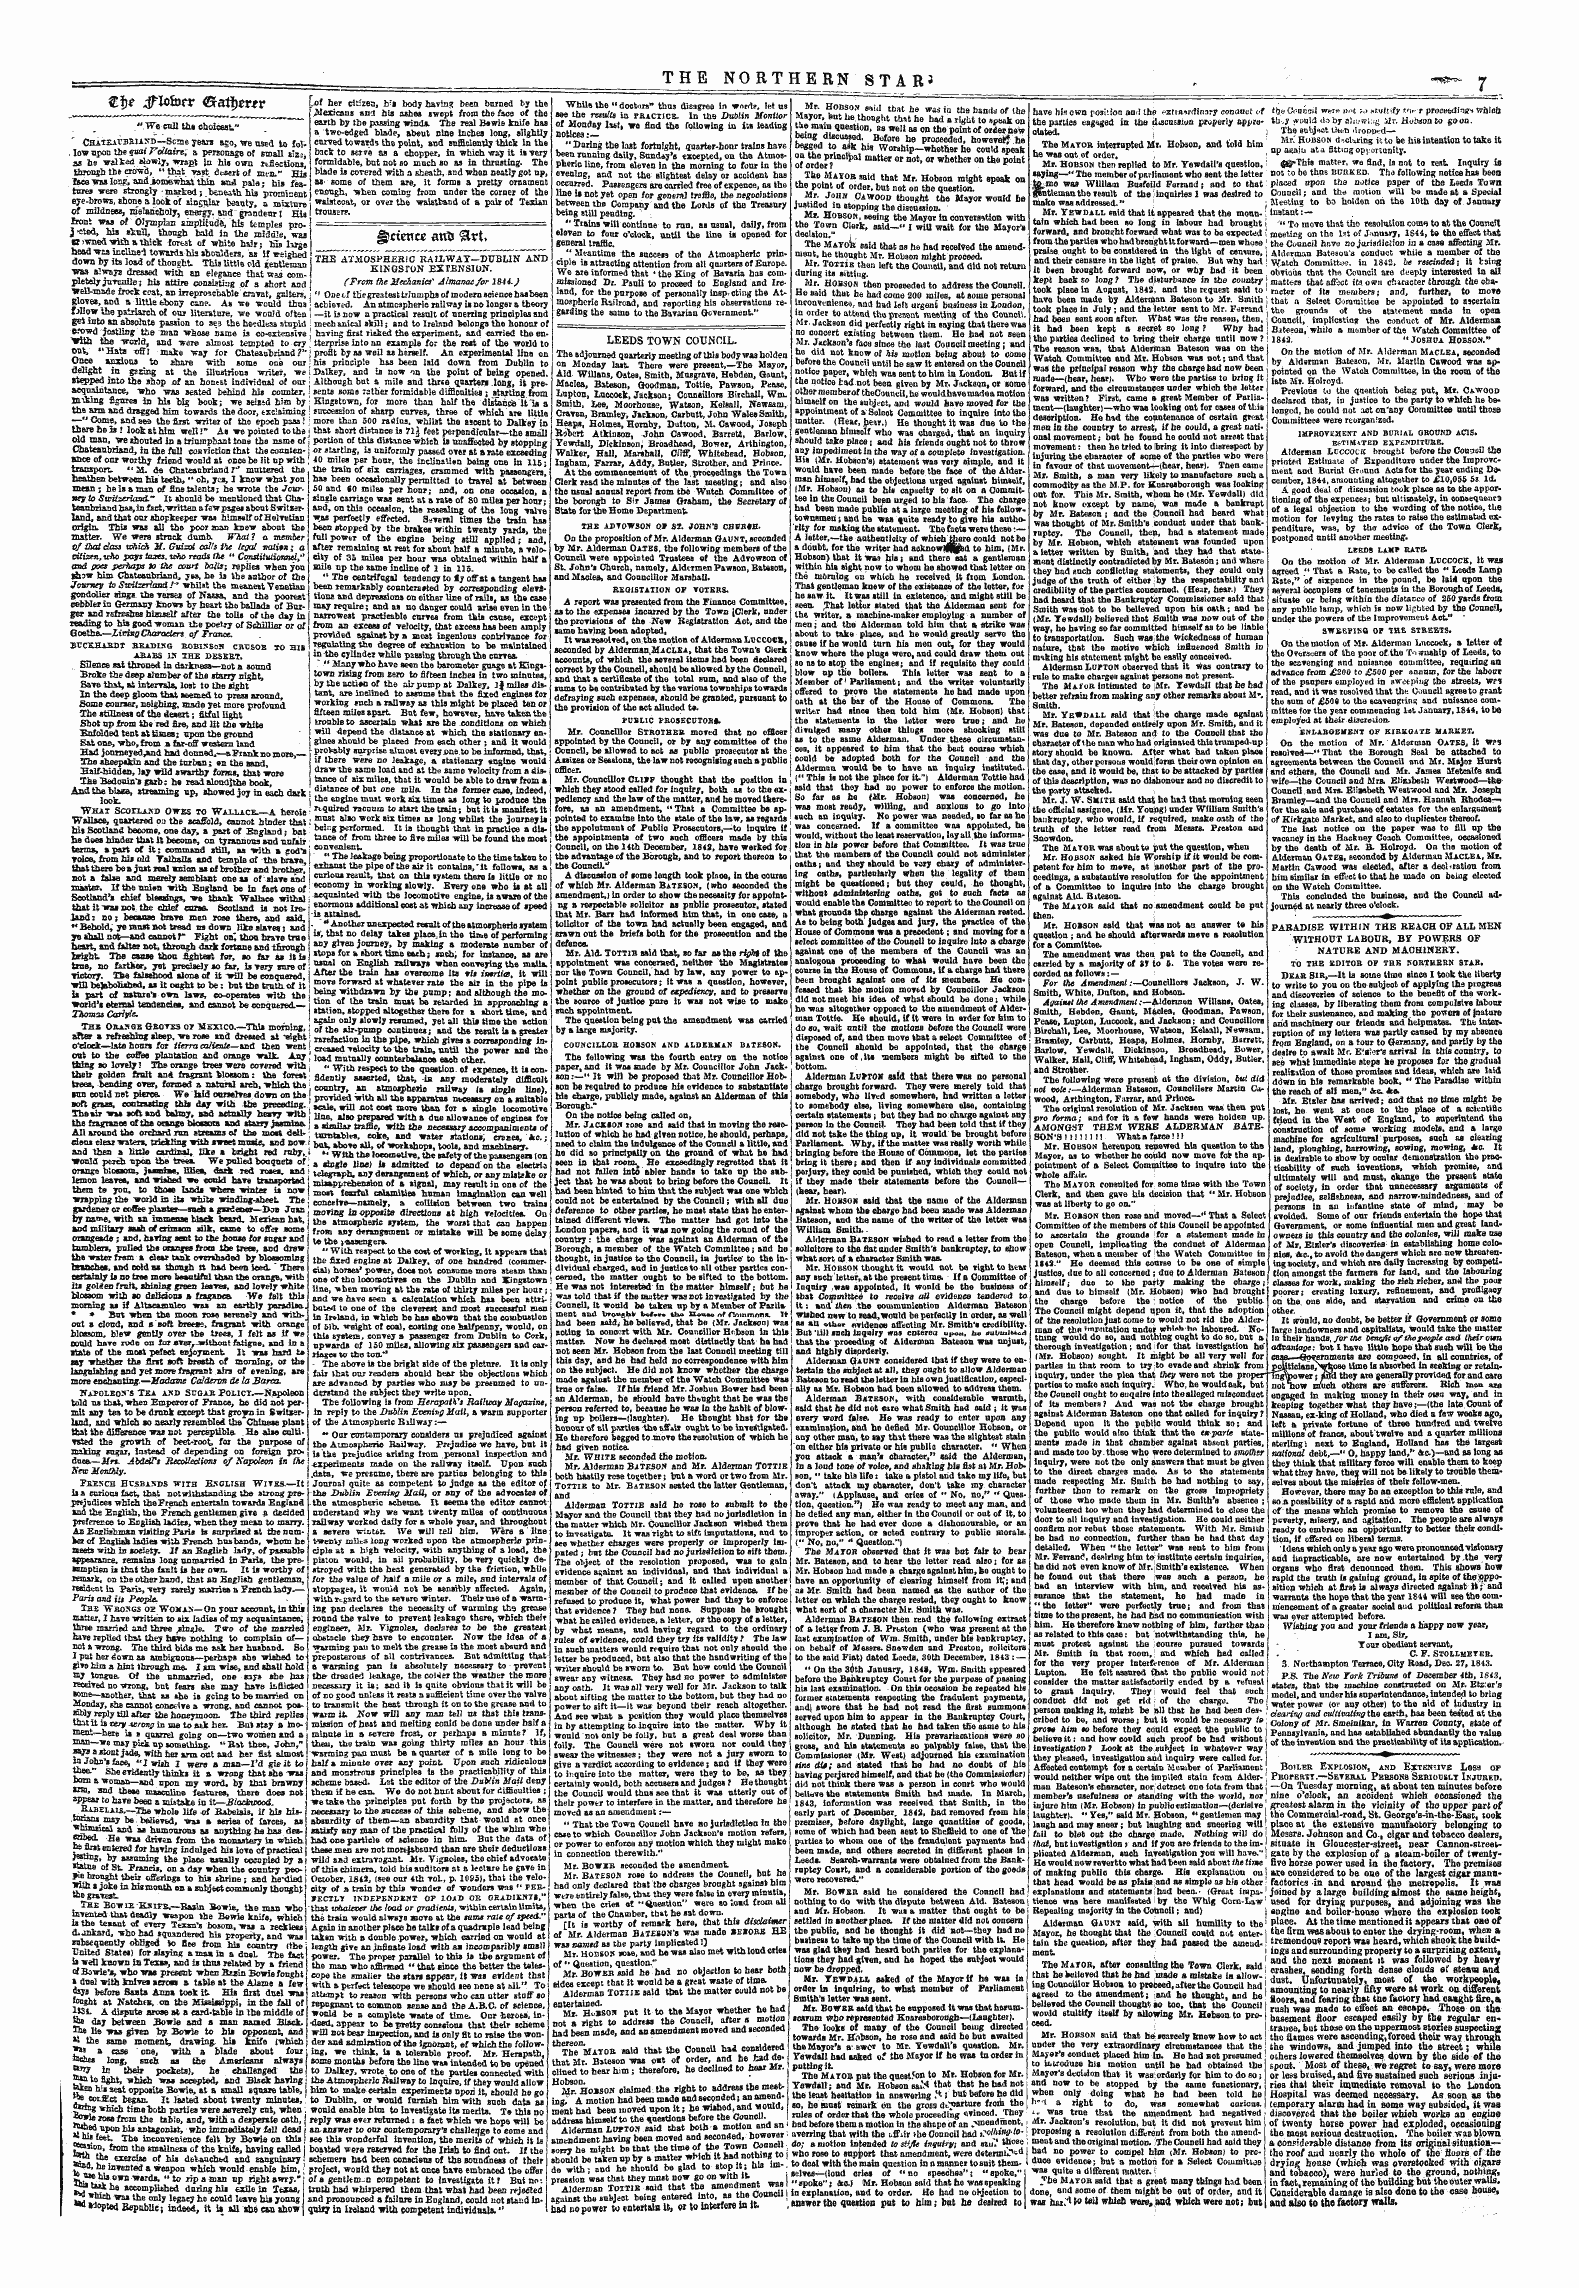 Northern Star (1837-1852): jS F Y, 1st edition - €$E Tfltfott Gtafytttv